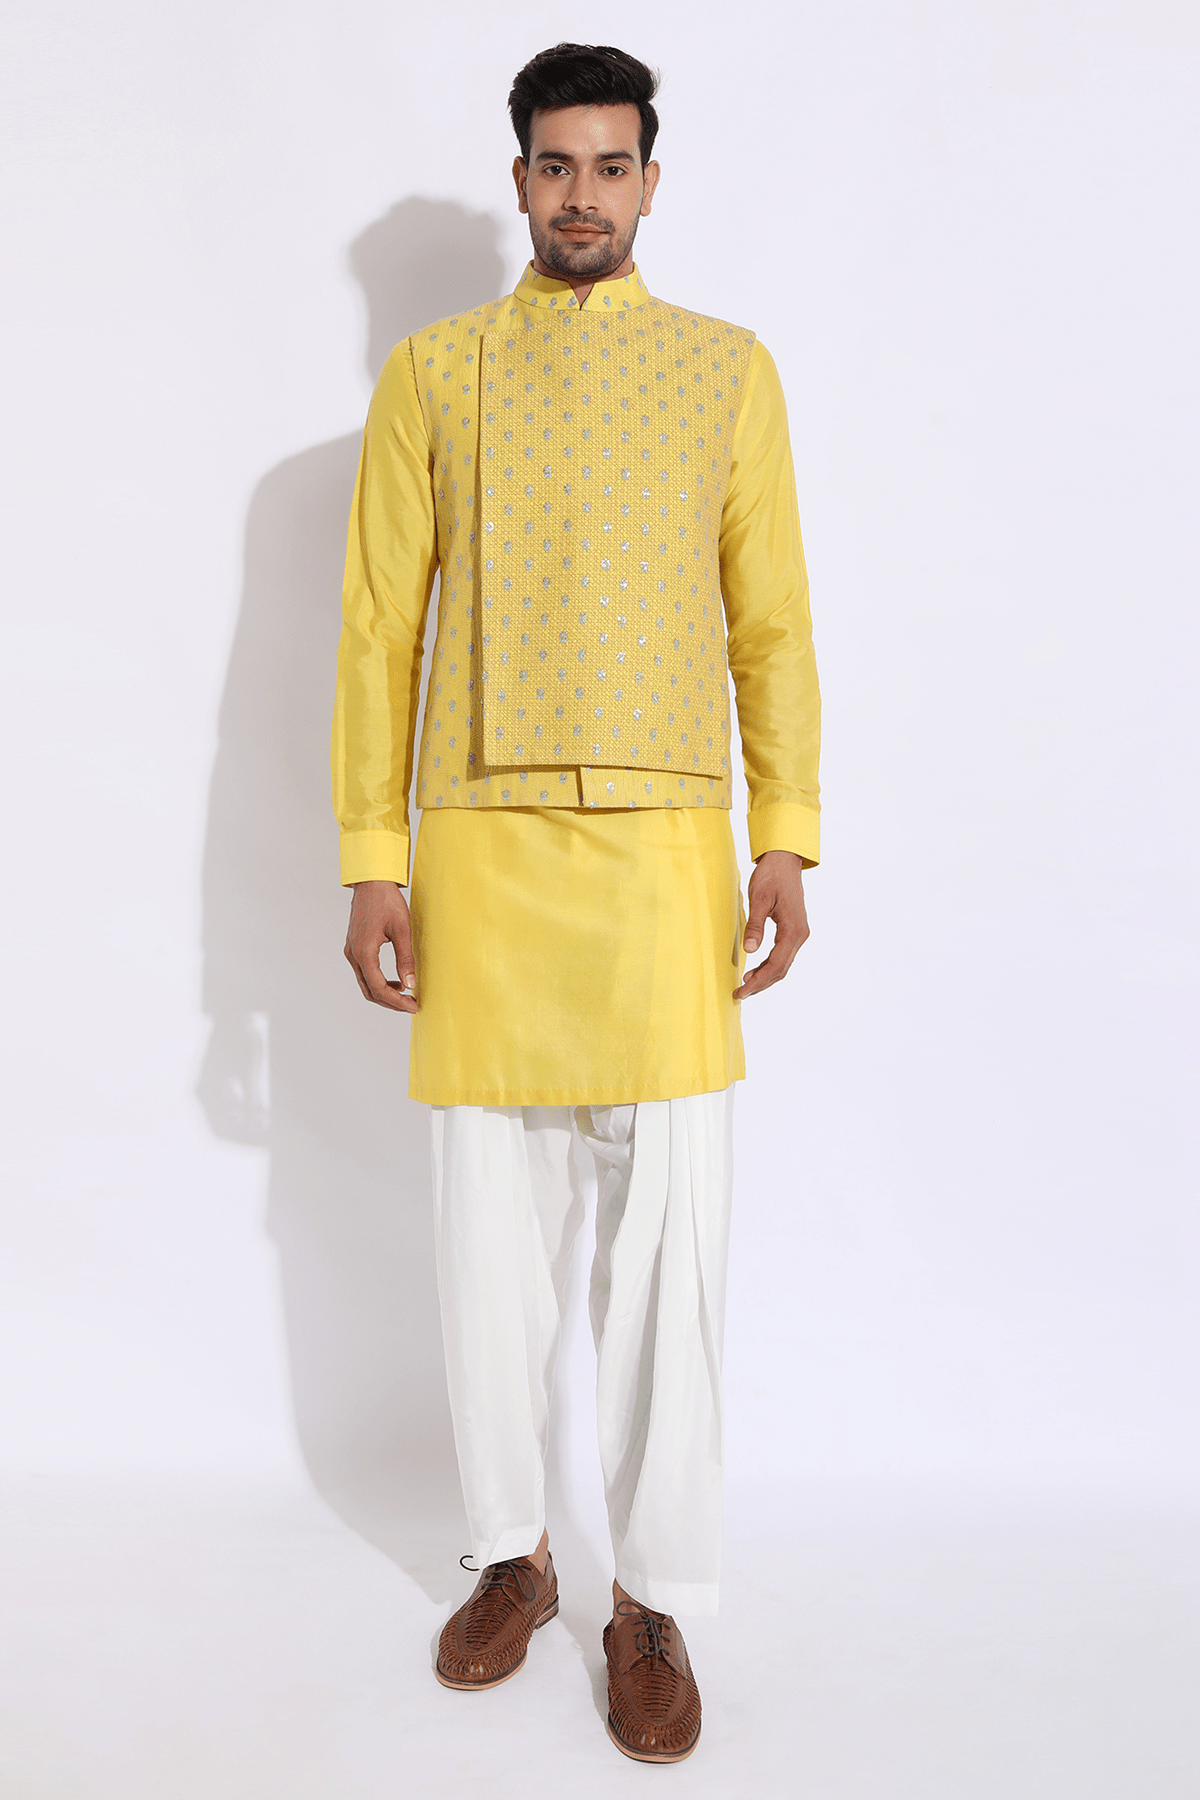 Yellow thread textured bandi kurta set - Kunal Anil Tanna